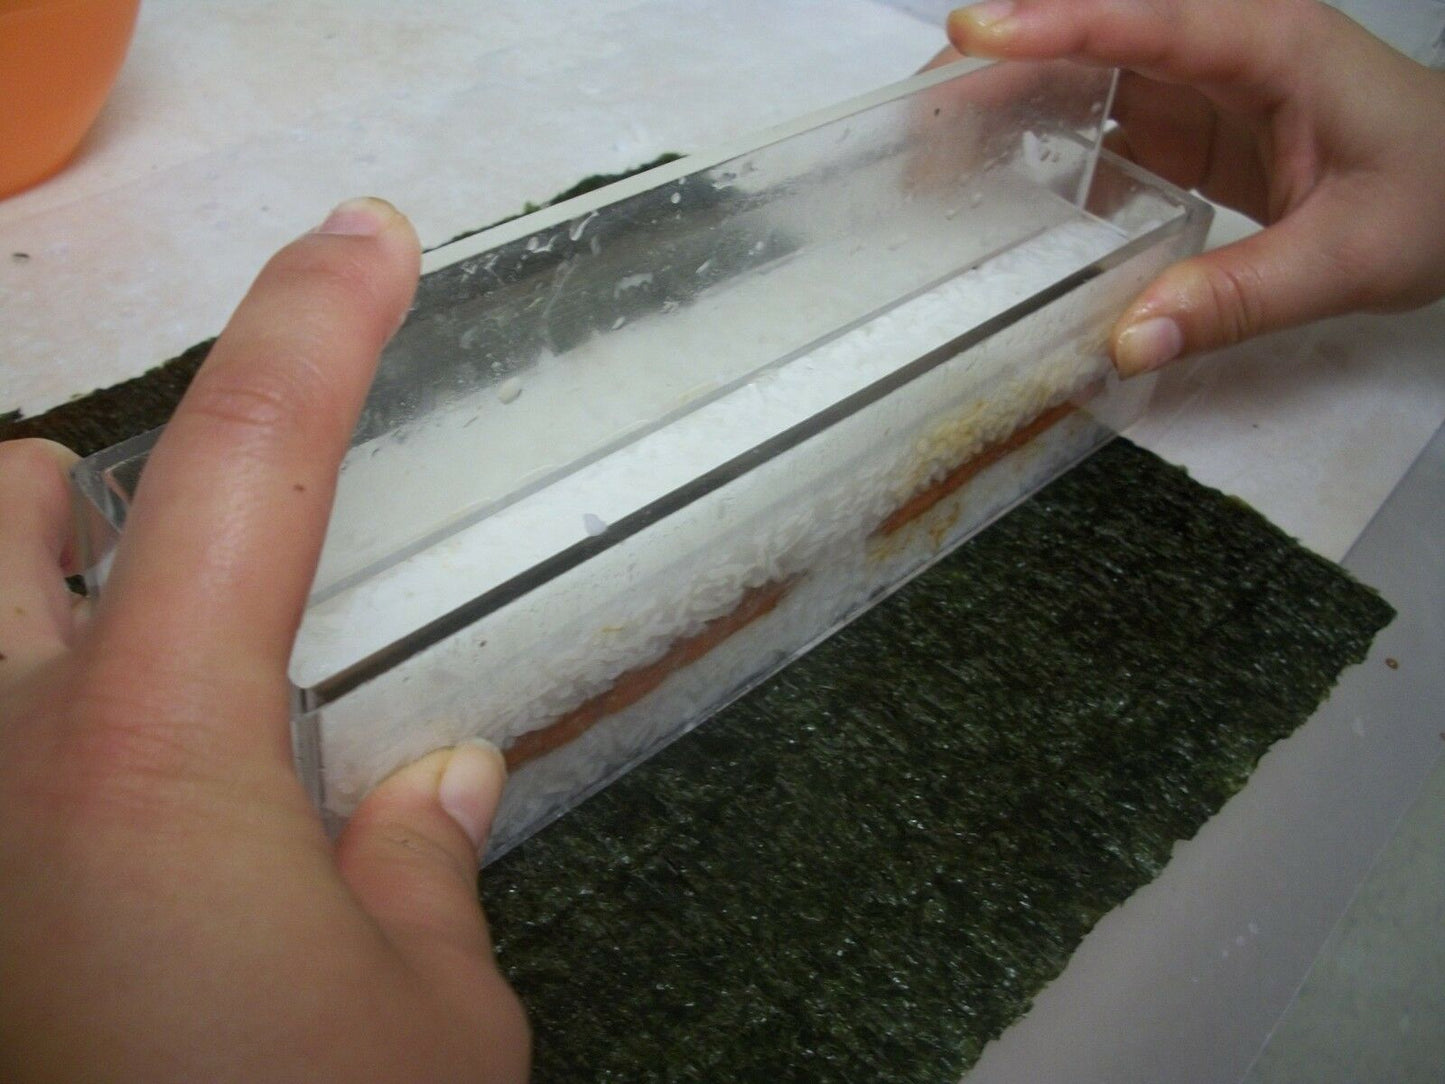 Double Economy Sized Acrylic Press Spam Musubi Non Stick Sushi Maker Mold SALE!